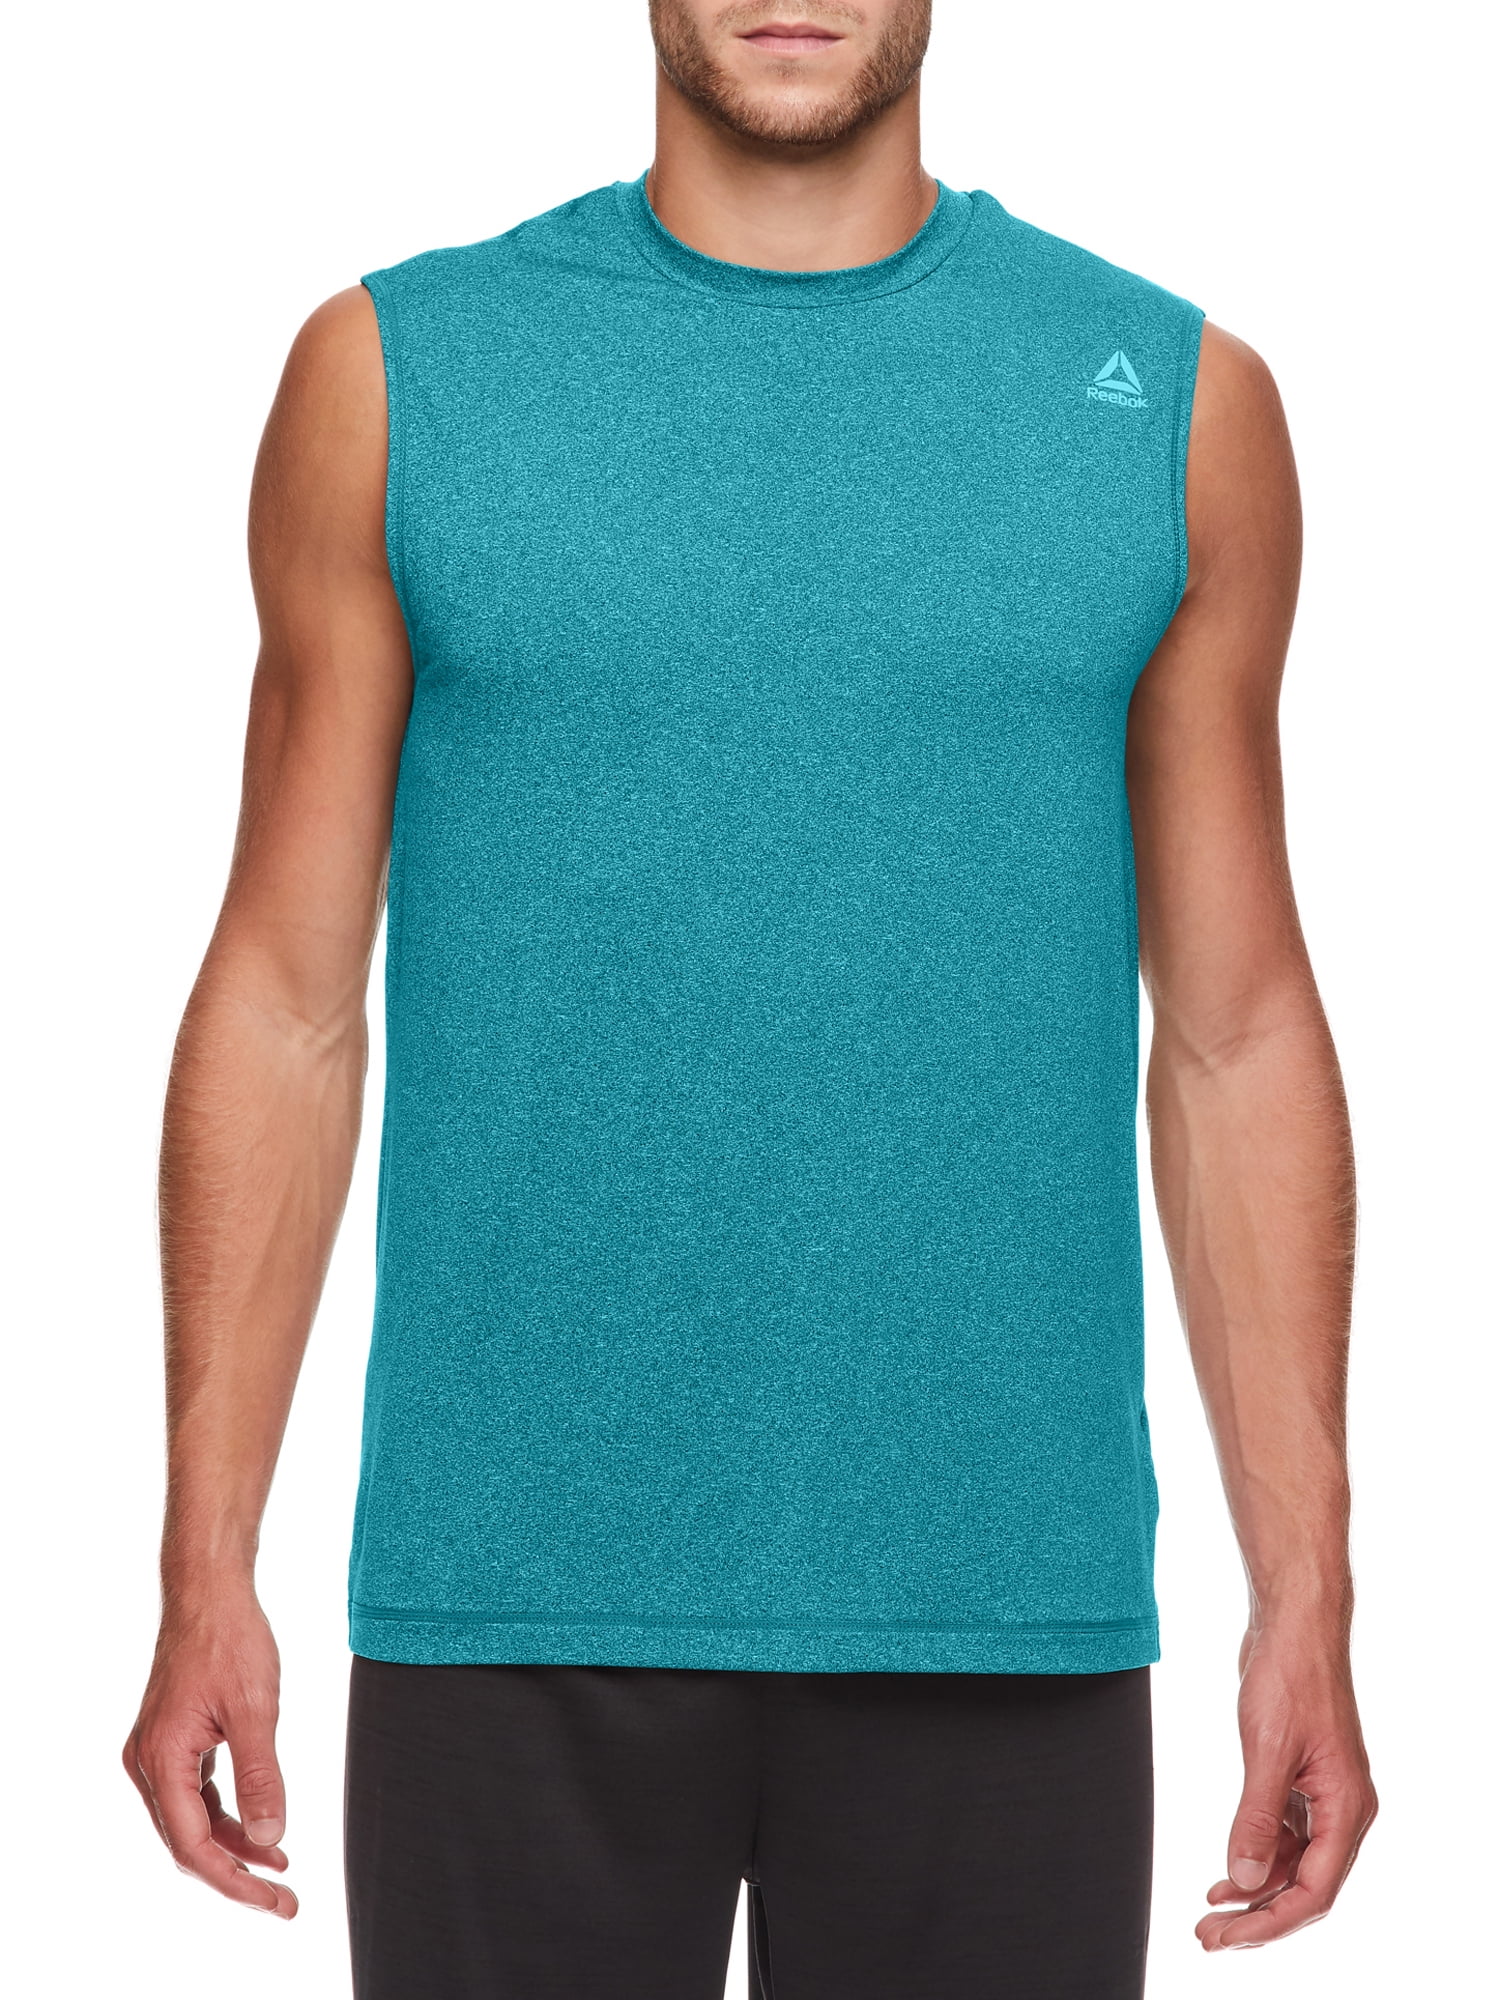 Reebok Mens Muscle Tank Top Sleeveless Workout & Training Activewear Gym Shirt 